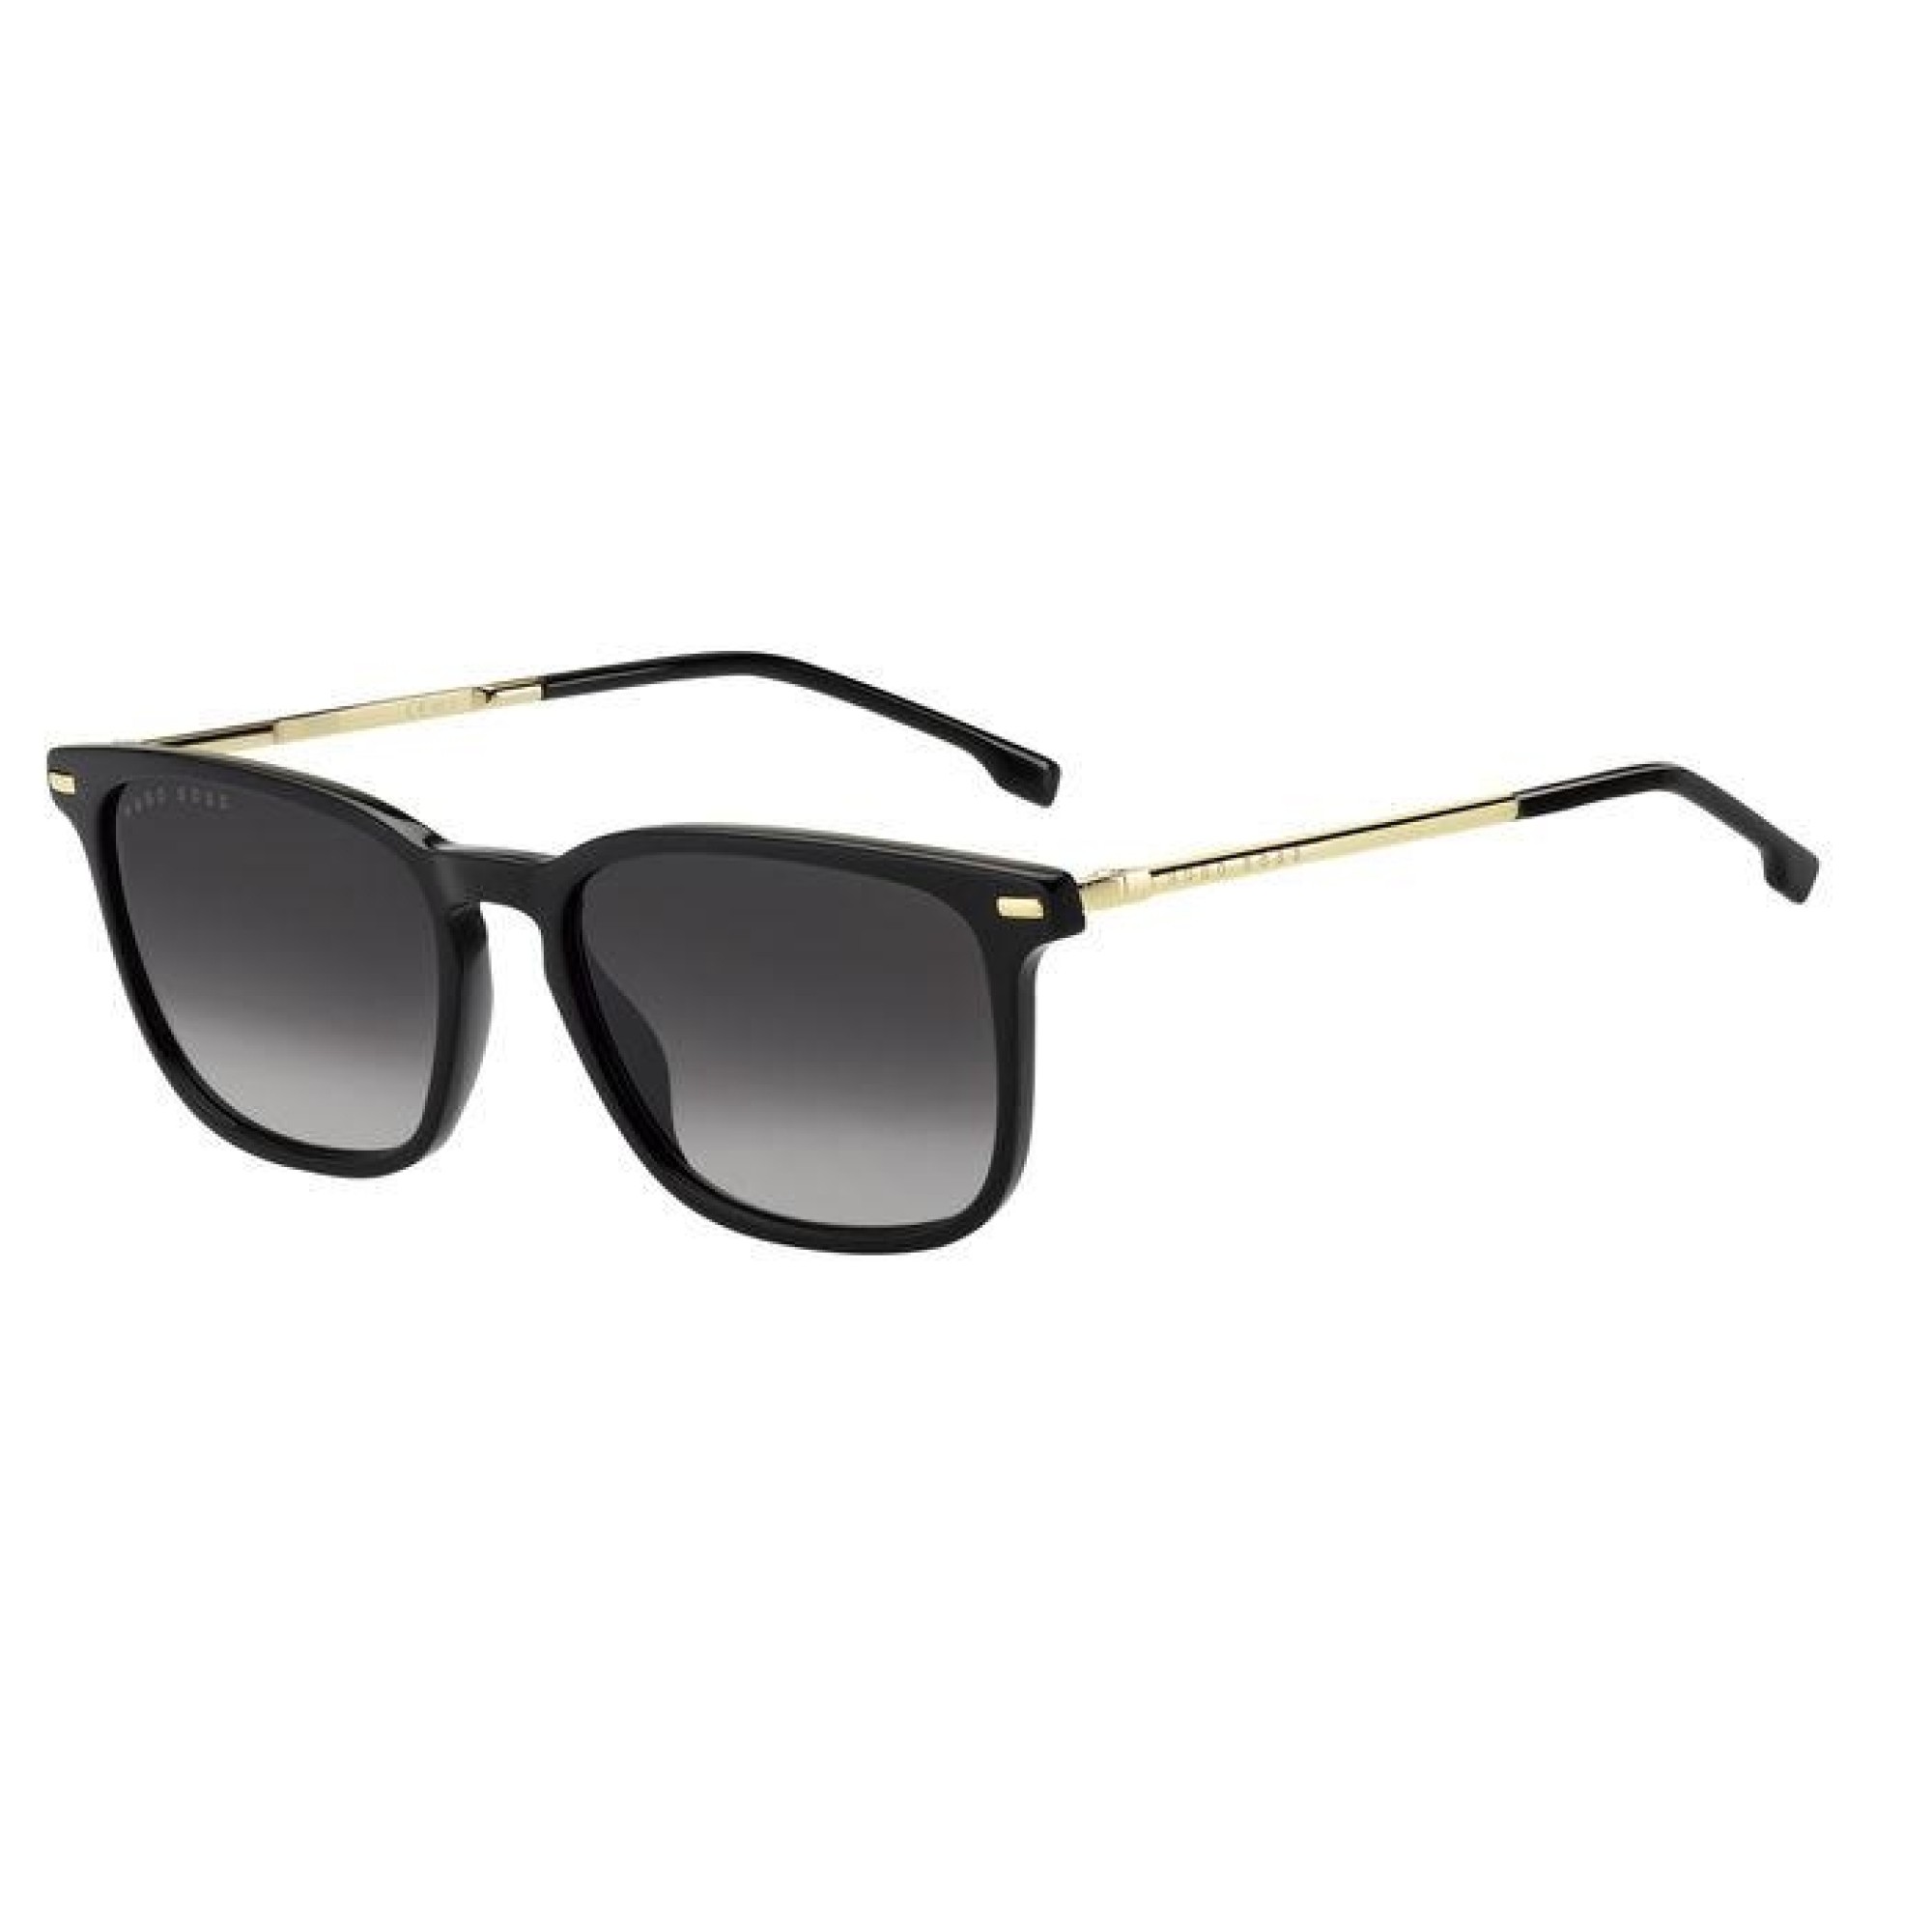 Hugo Boss BOSS 1020/S - 2M2 9O Black Gold | Sunglasses Man